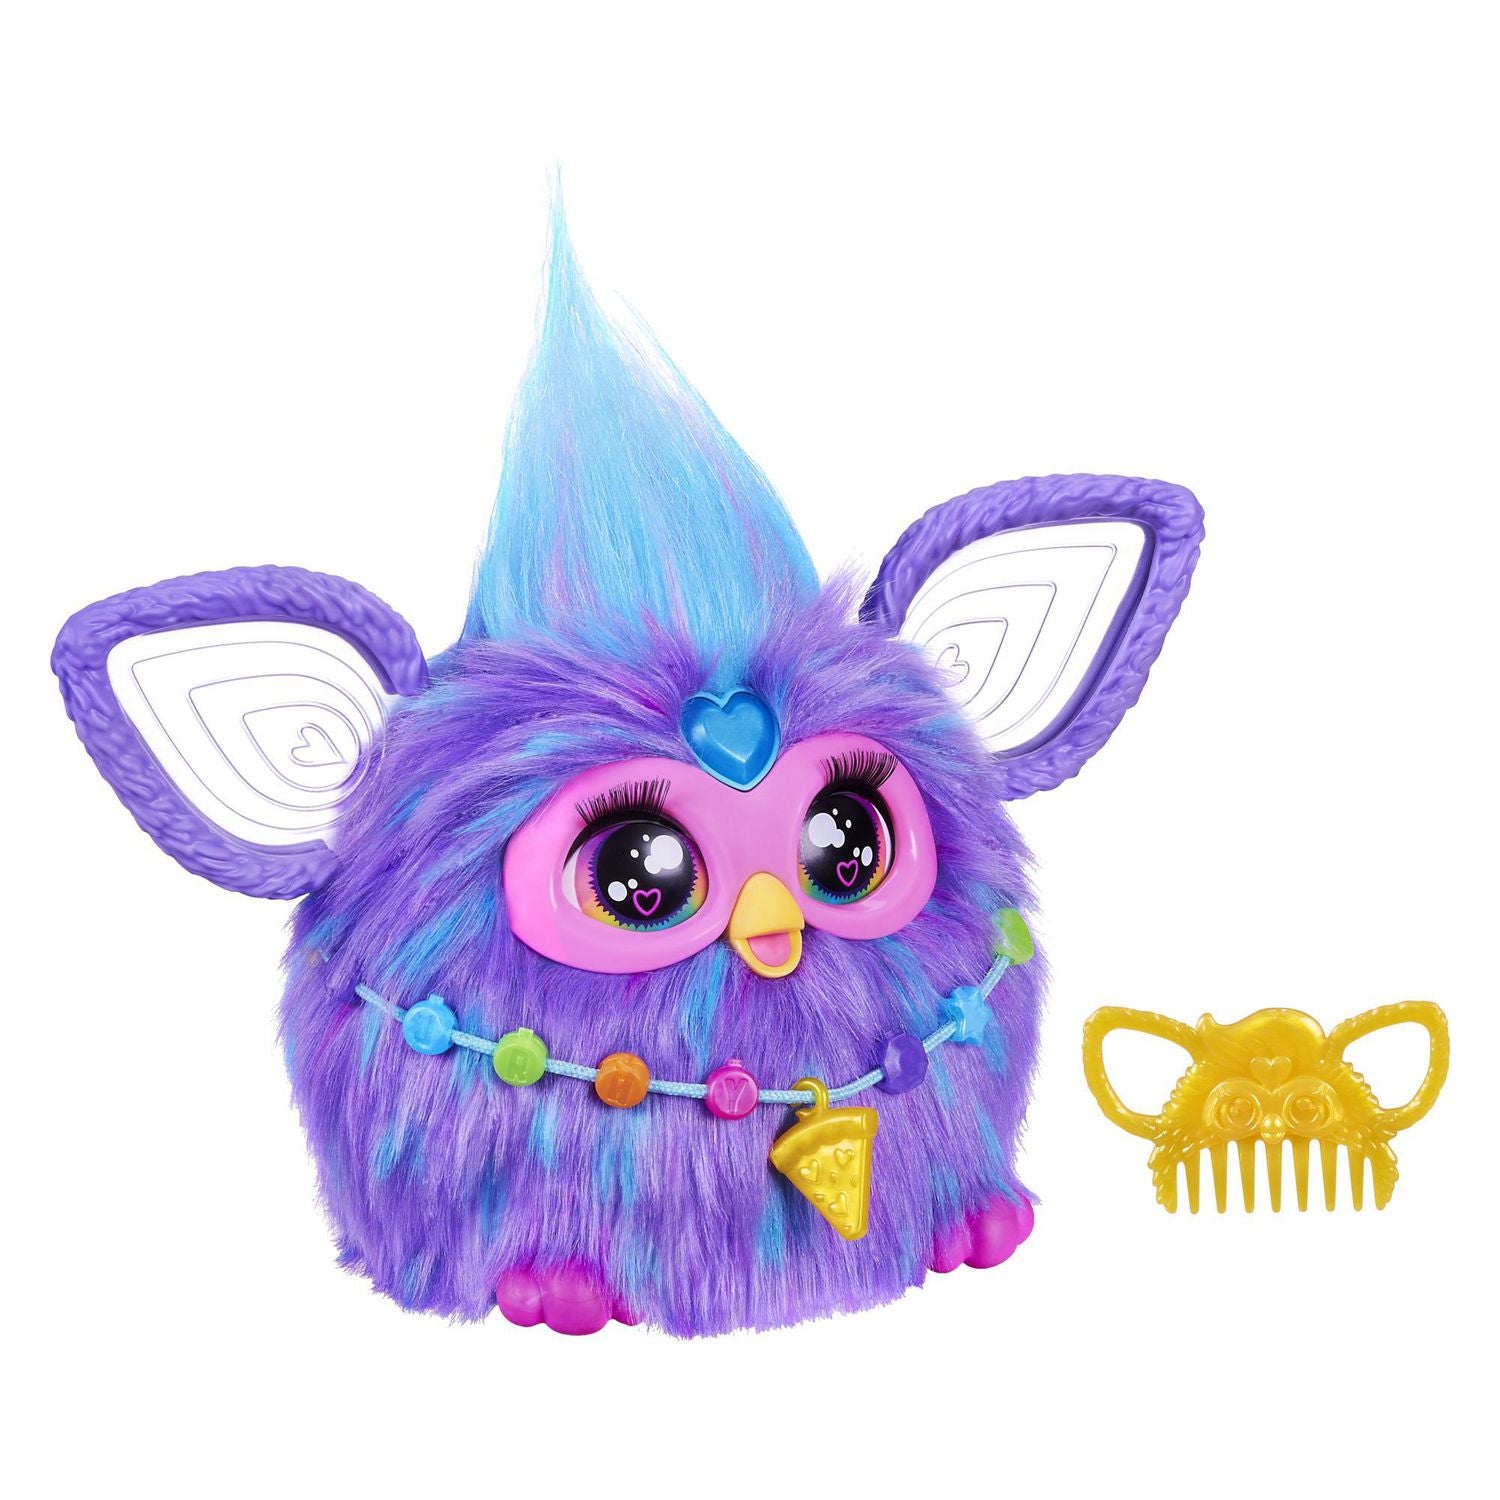 Furby Purple Interactive Plush Toy - English Version